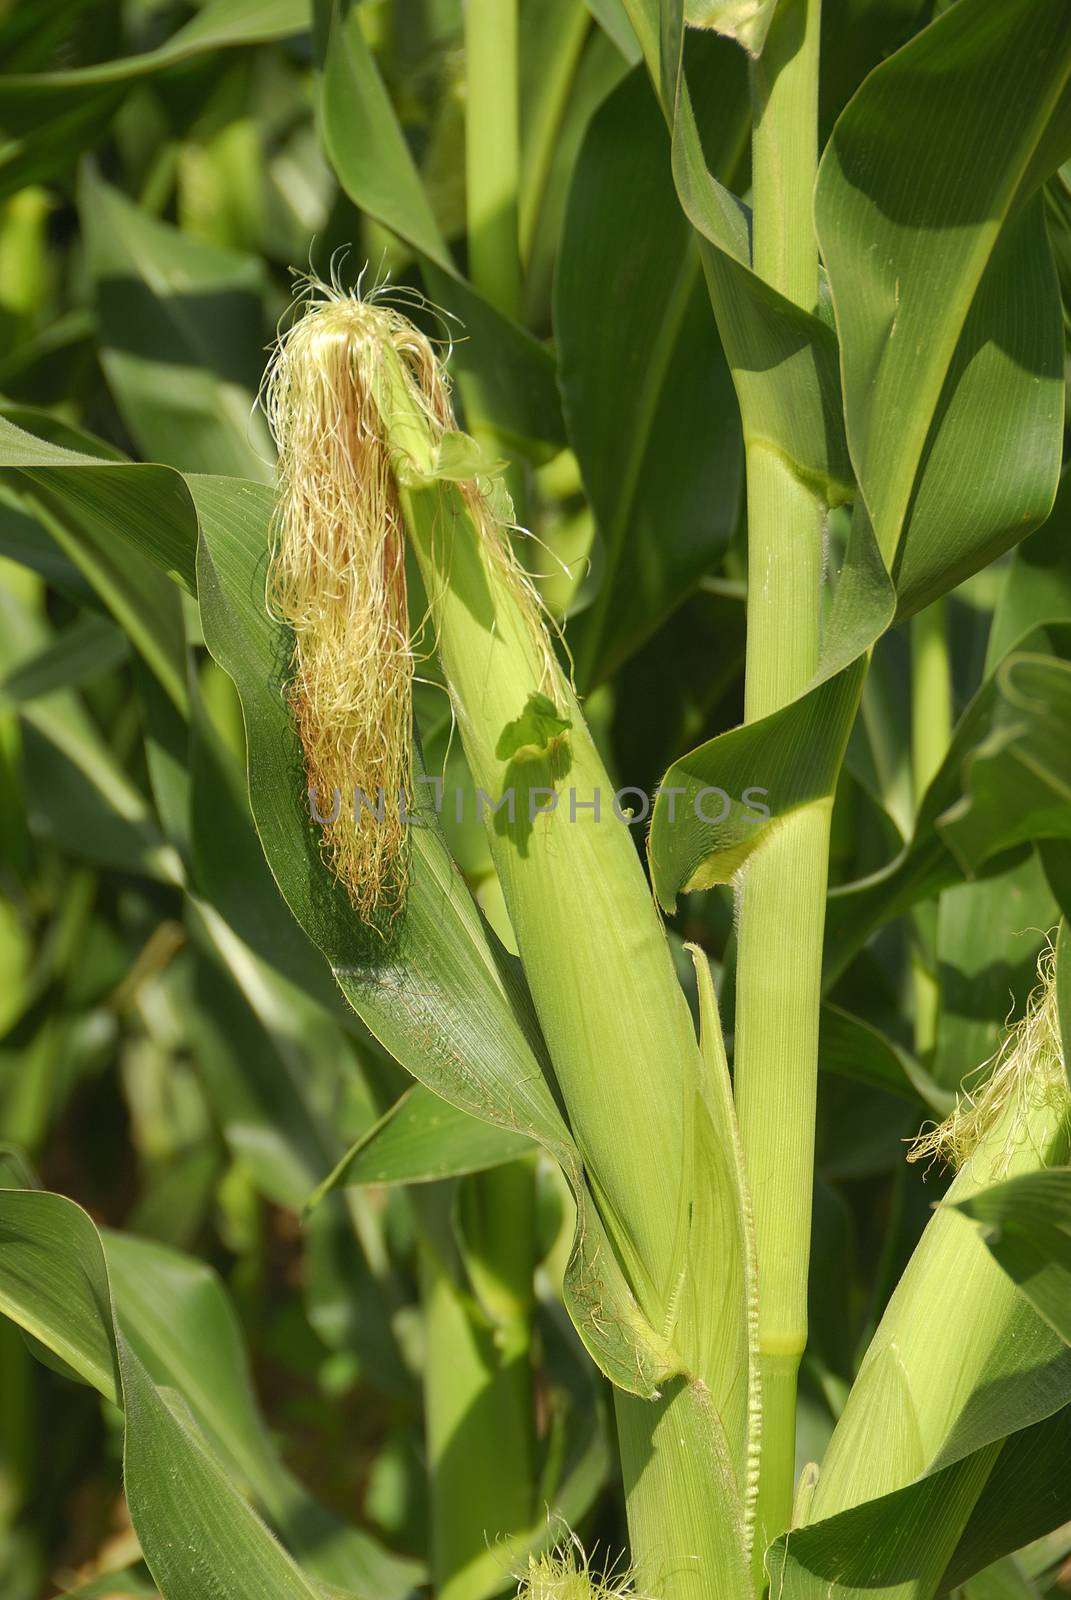 Zea mays, Corn, Allergens Plants by jalonsohu@gmail.com